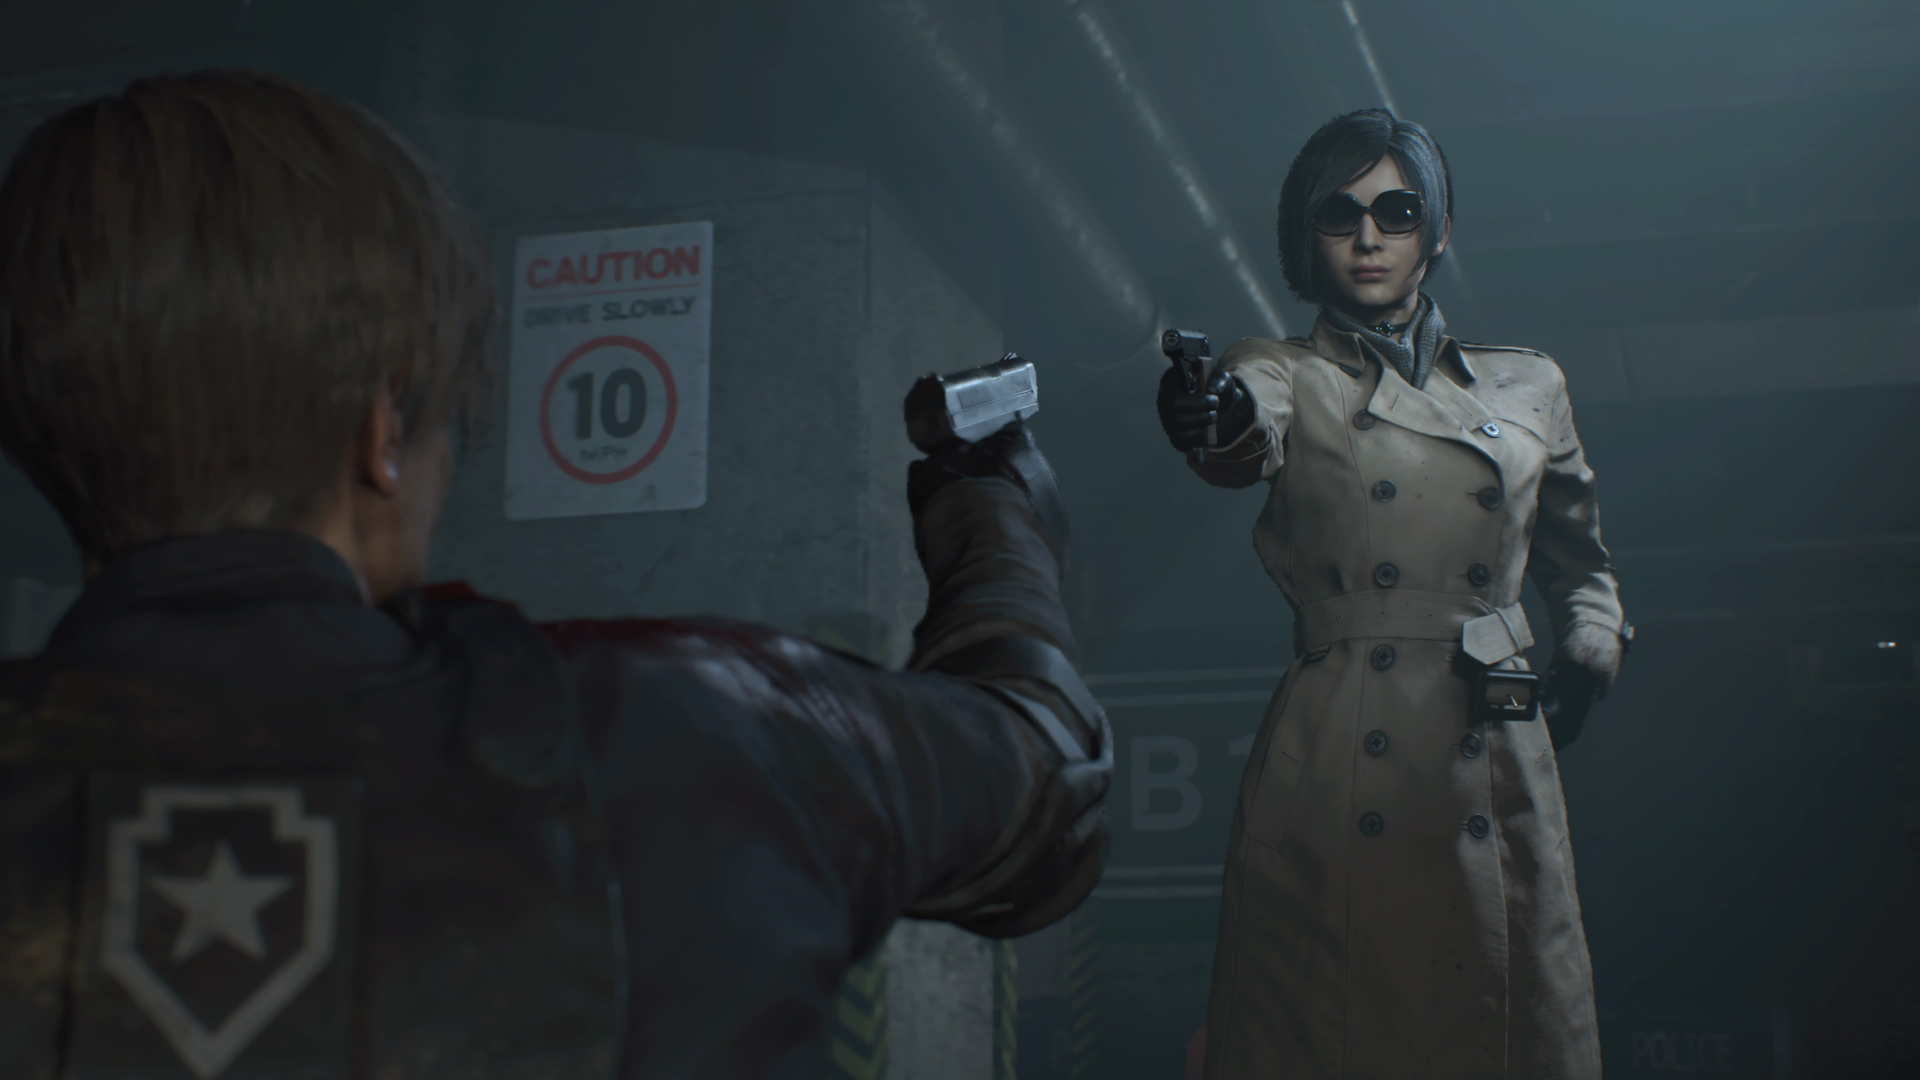 Resident Evil 2 Remake: Game development 'is on track